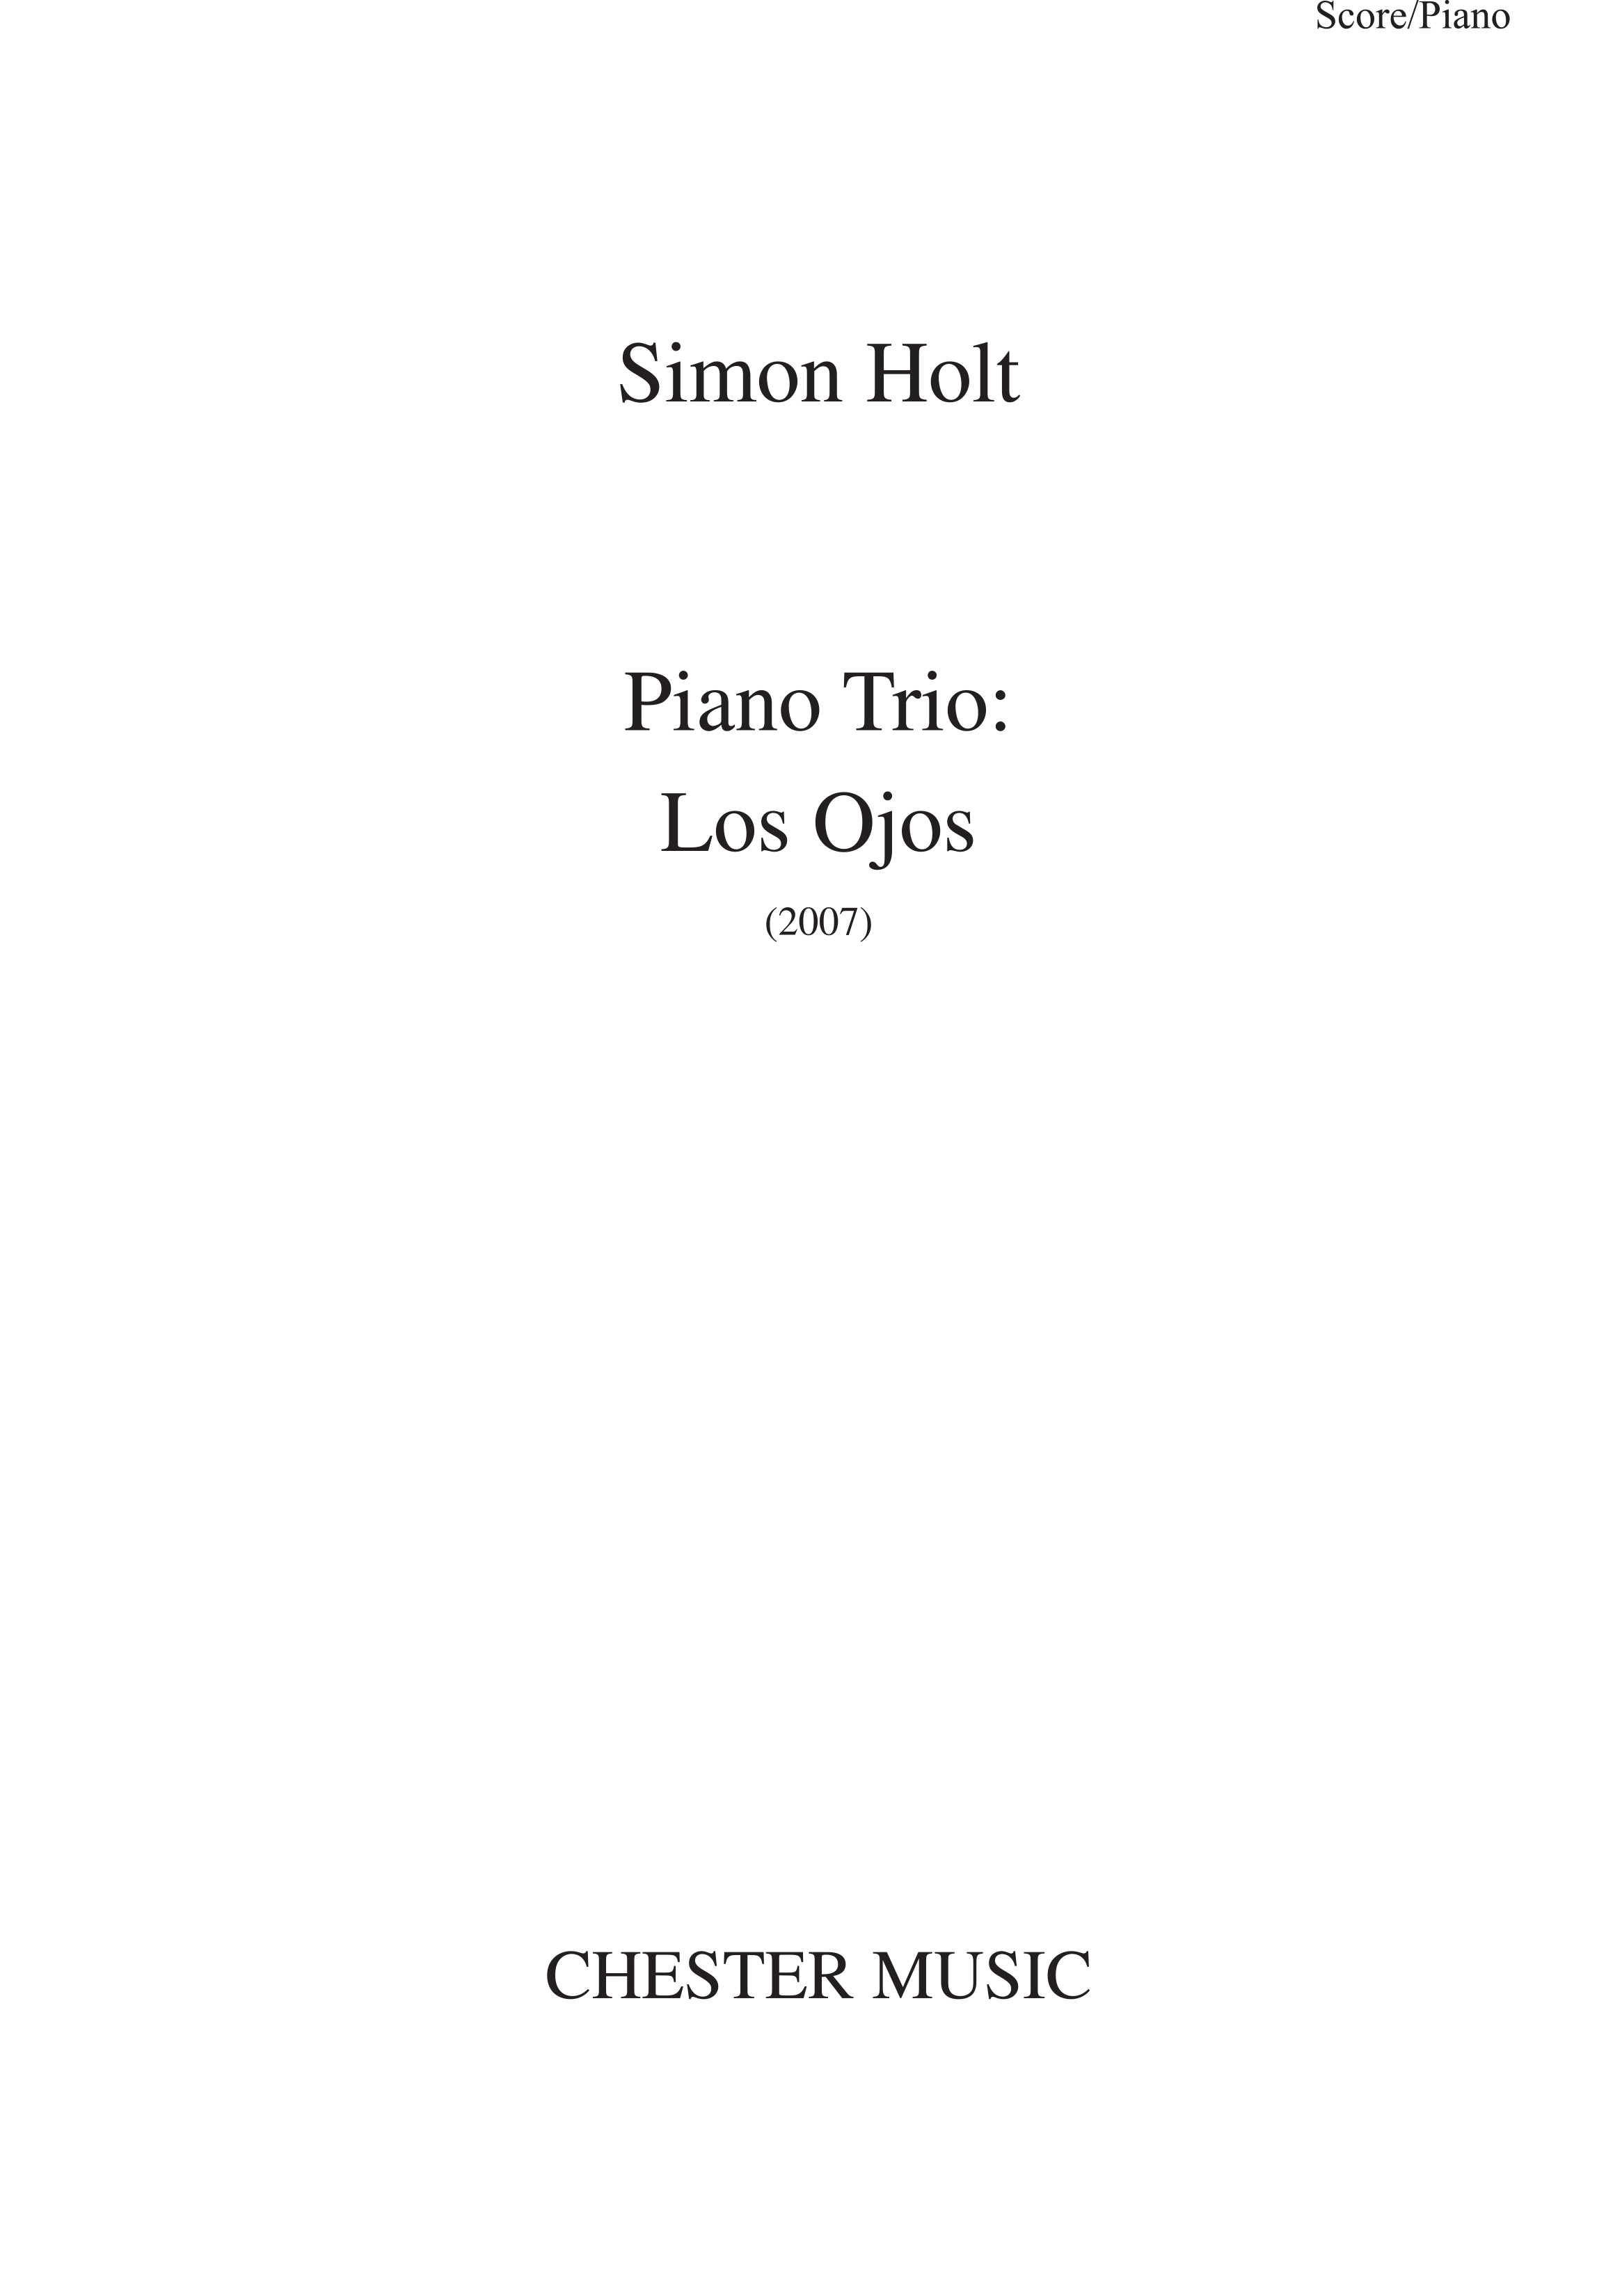 Simon Holt: Piano Trio - Los Ojos: Chamber Ensemble: Score and Parts